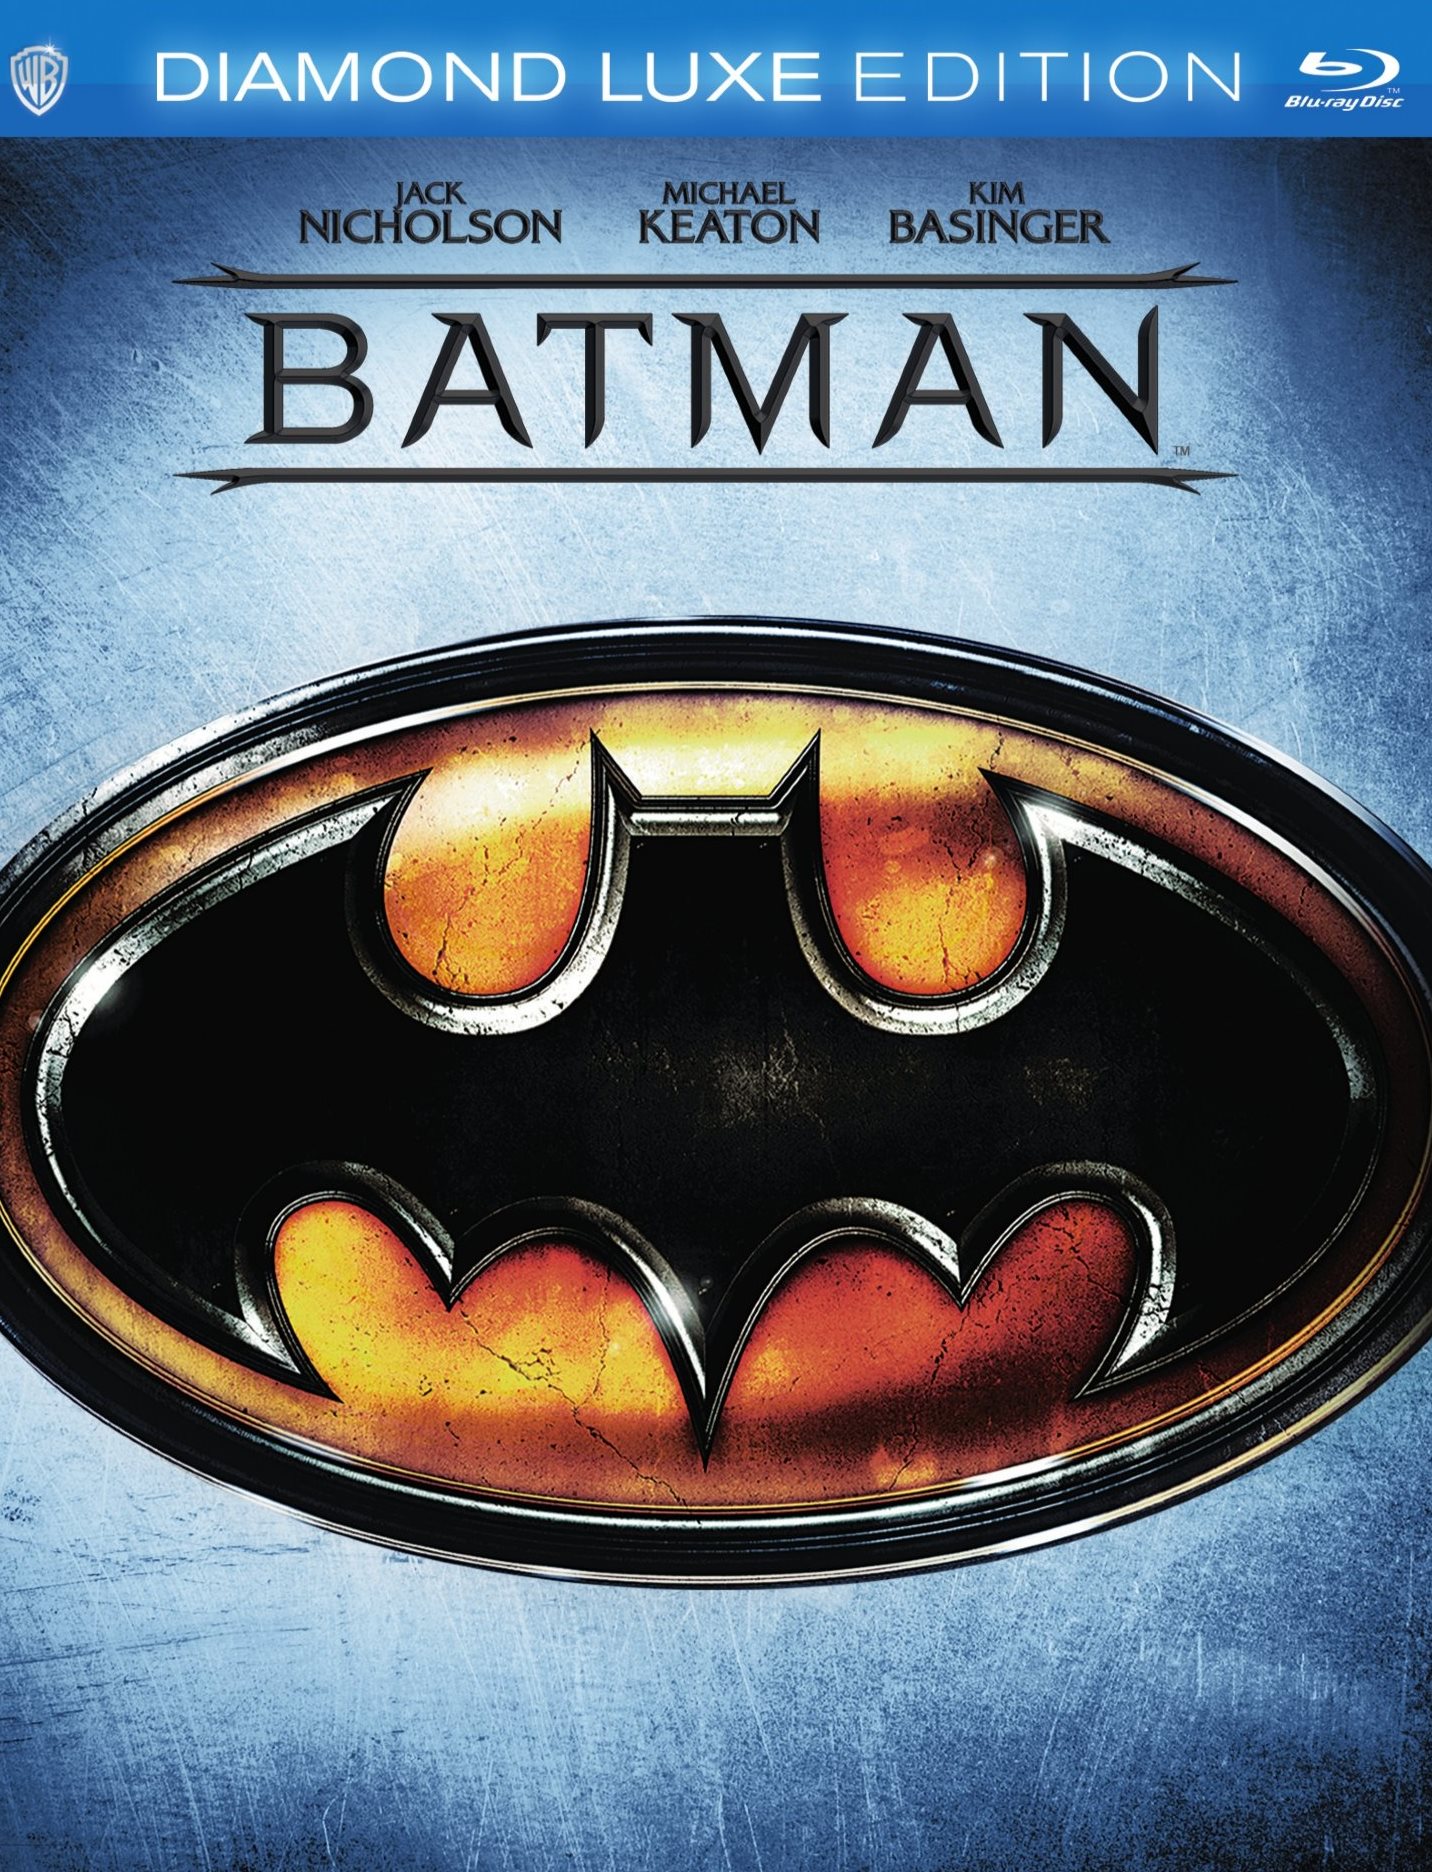 Batman [Diamond Luxe Edition] [25th Anniversary] [Blu-ray] [1989] - Best Buy